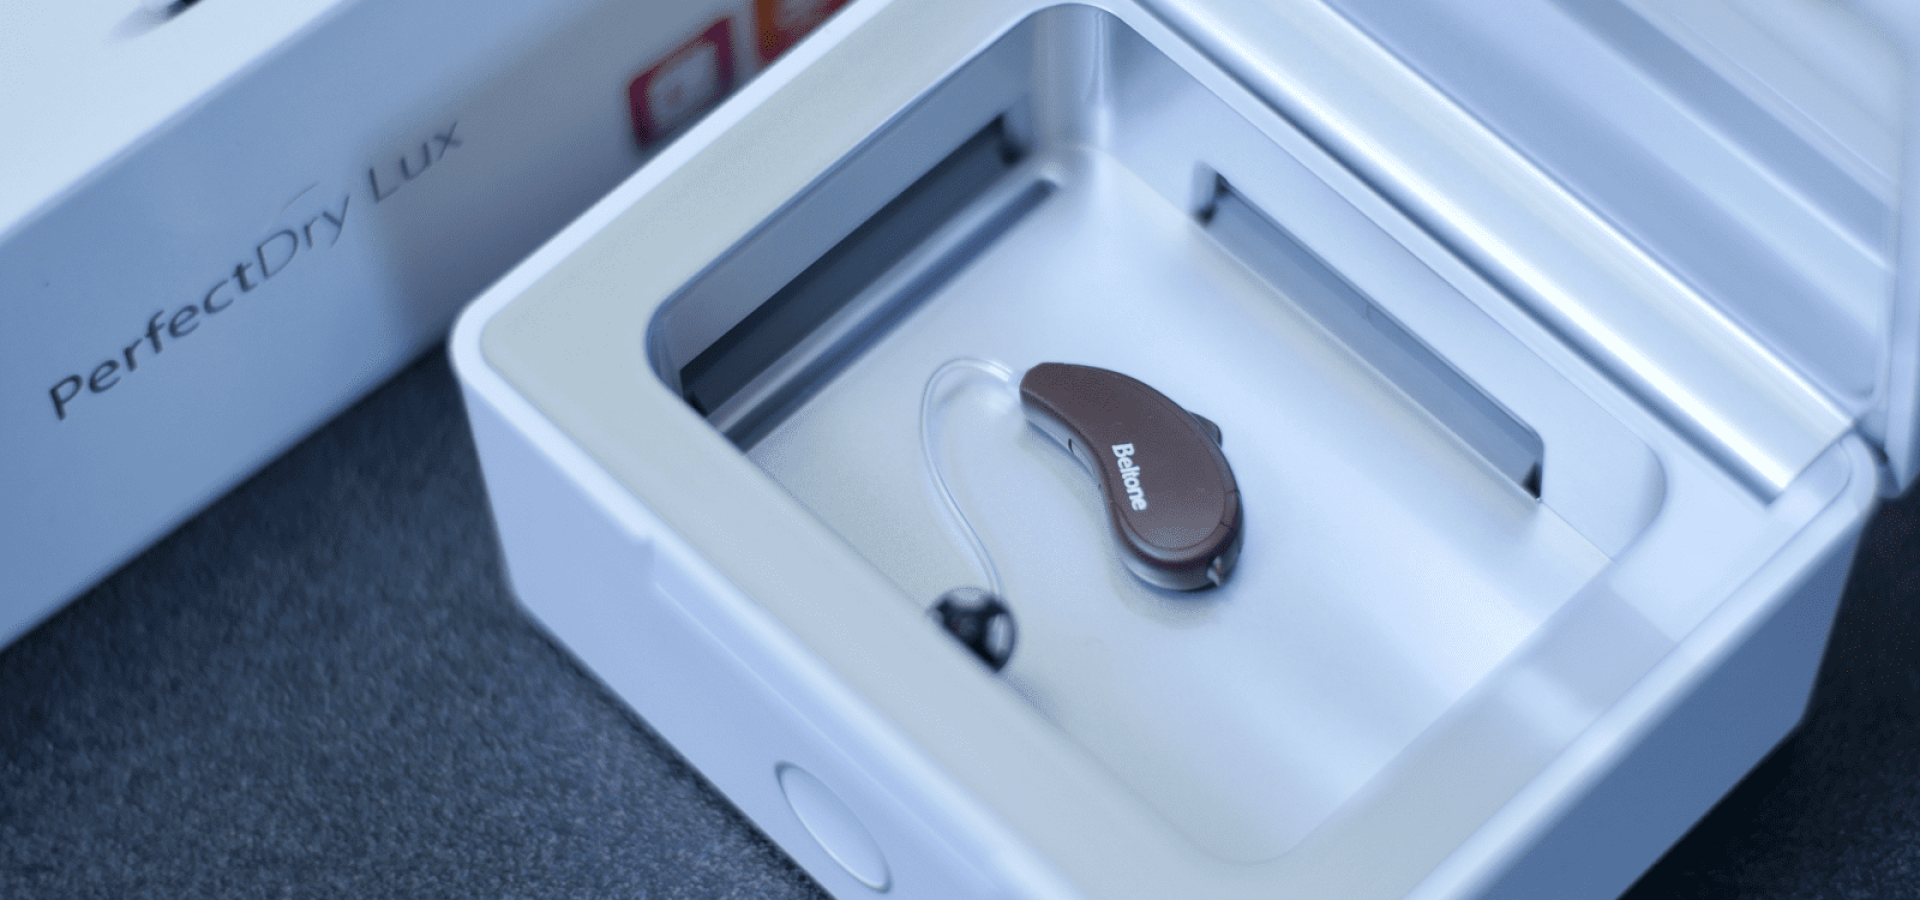 Black Beltone hearing aid inside a white box